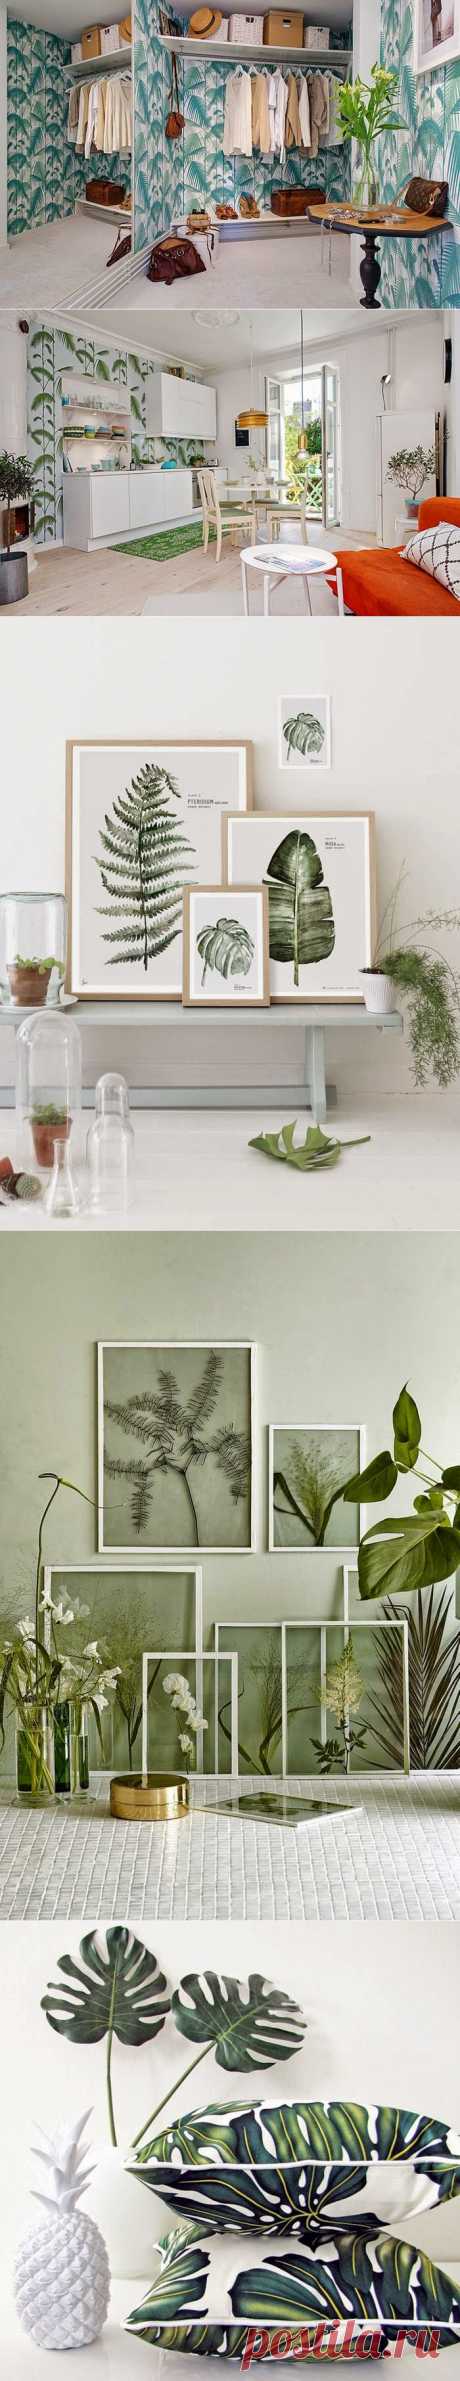 Модный интерьерный тренд: ботаника | Sweet home